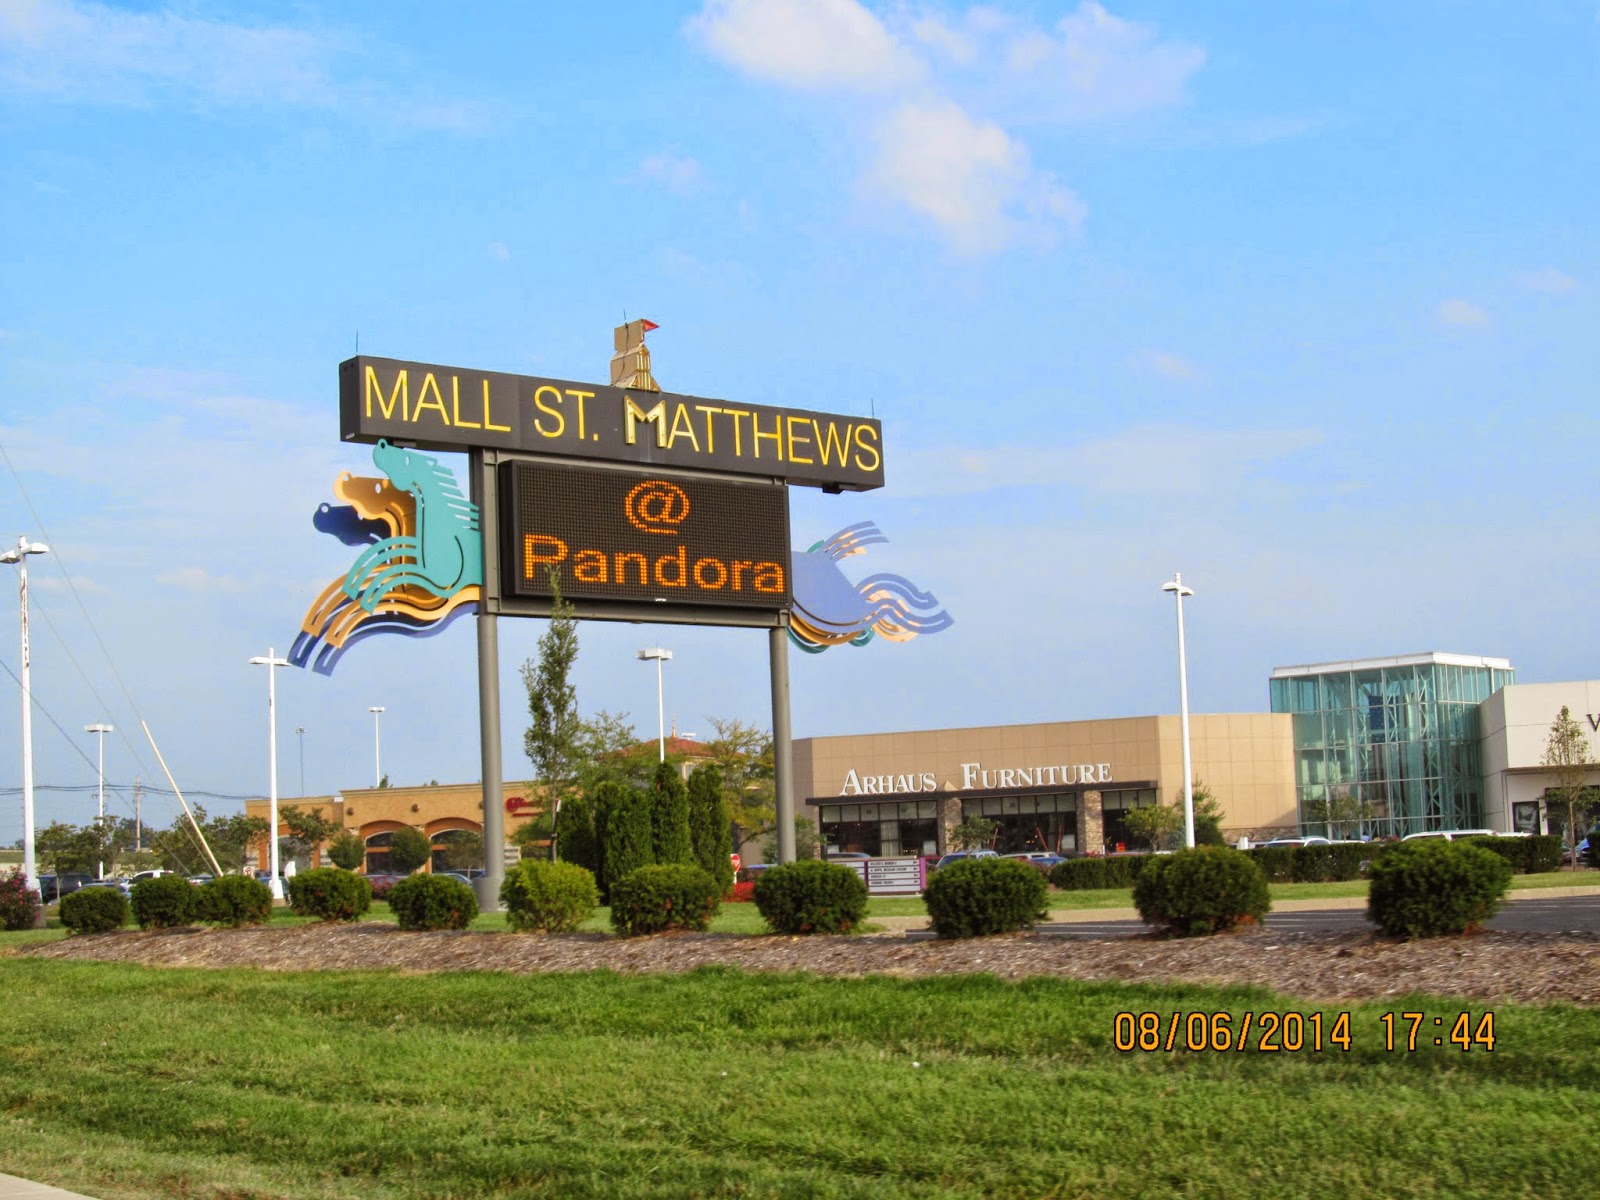 Trip to the Mall: Mall St. Matthews- (Louisville, KY)